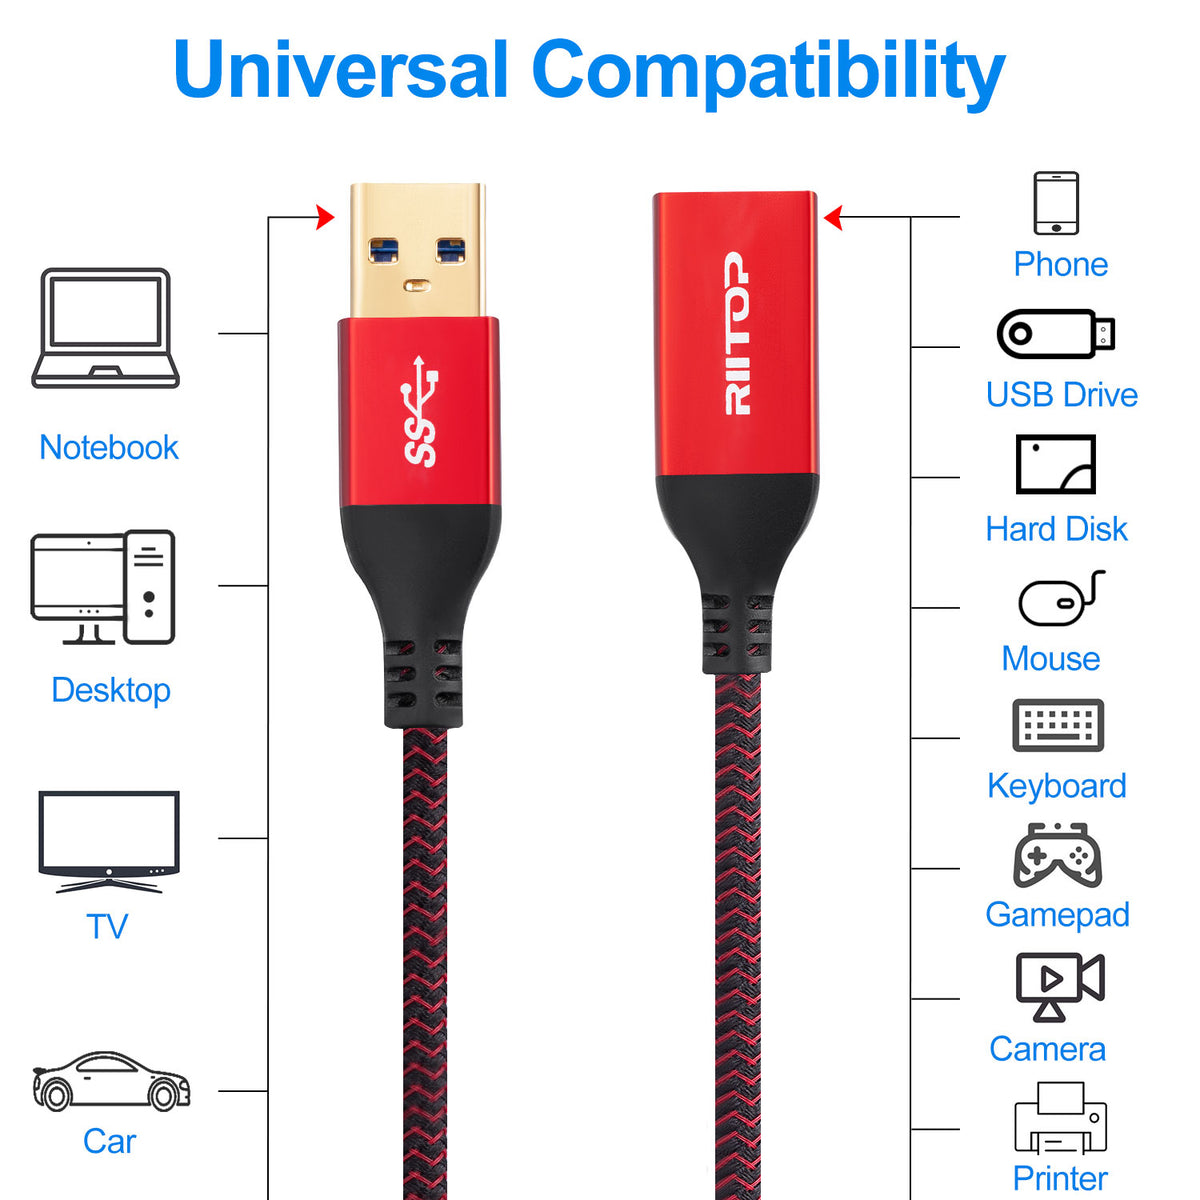 Rallonge USB 2,0 Type-A Mâle/Femelle 3m Gris - EXERTIS CONNECT